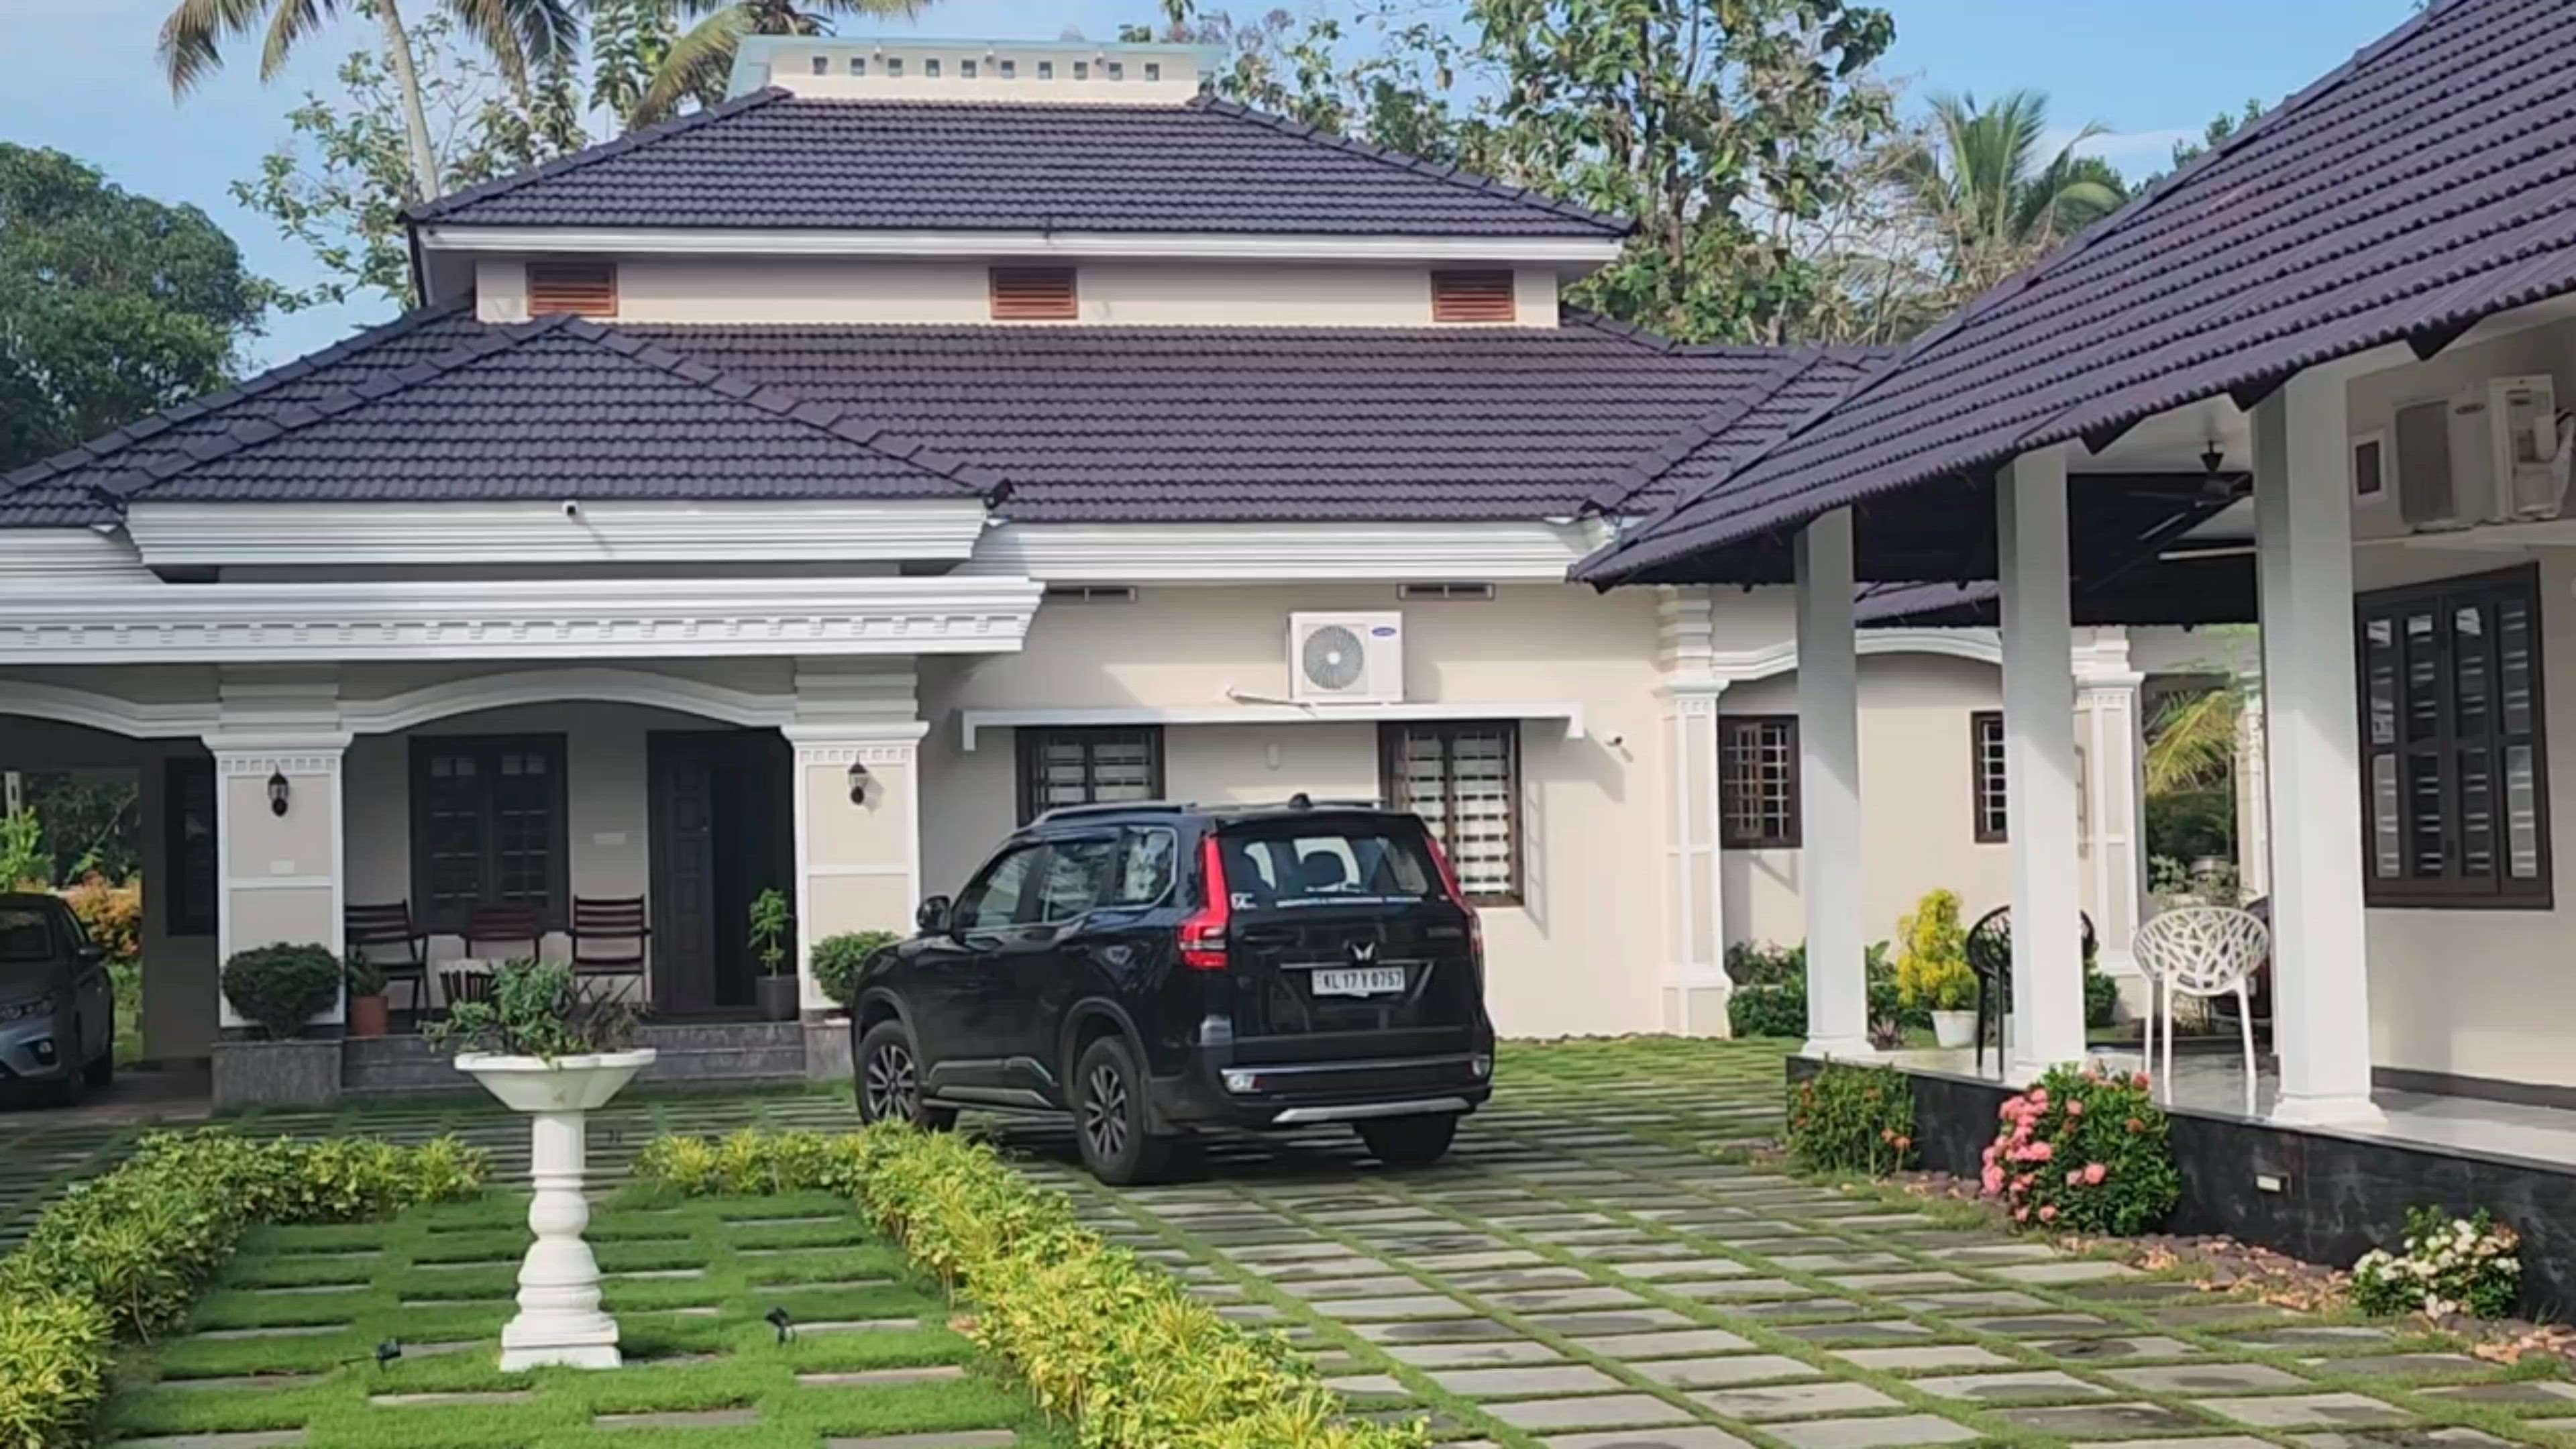 #Architect  #classichomes  #KeralaStyleHouse  #modernhome  #Architectural&Interior  #HouseRenovation  #Ernakulam  #Kottayam  #Thrissur  #Malappuram  #RoofingIdeas  #paving  #LandscapeIdeas  #SingleFloorHouse  #luxuryvillas